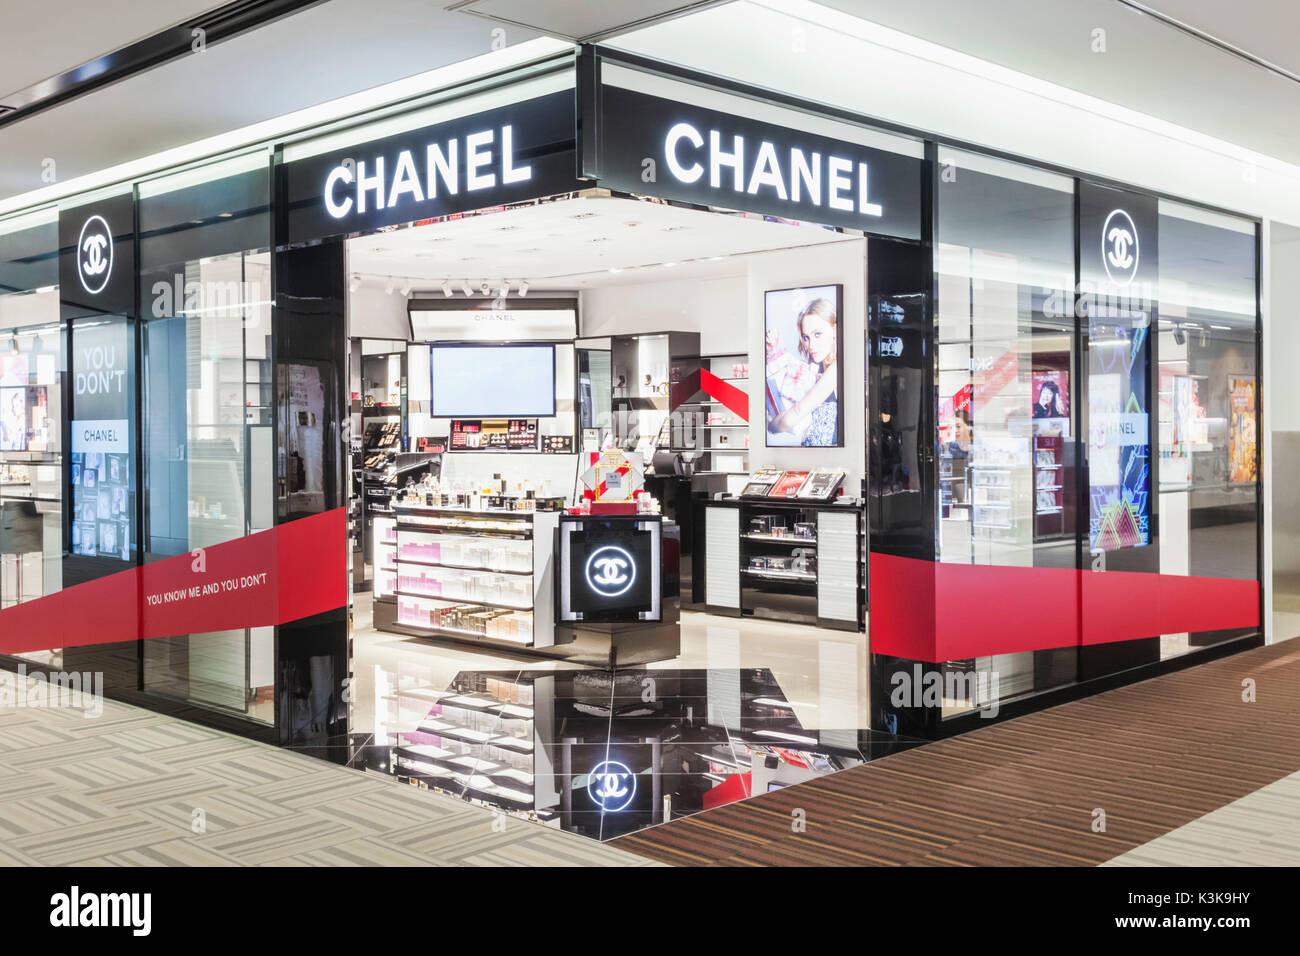 Suria KLCC shopping mall – Stock Editorial Photo © teamtime #125322100